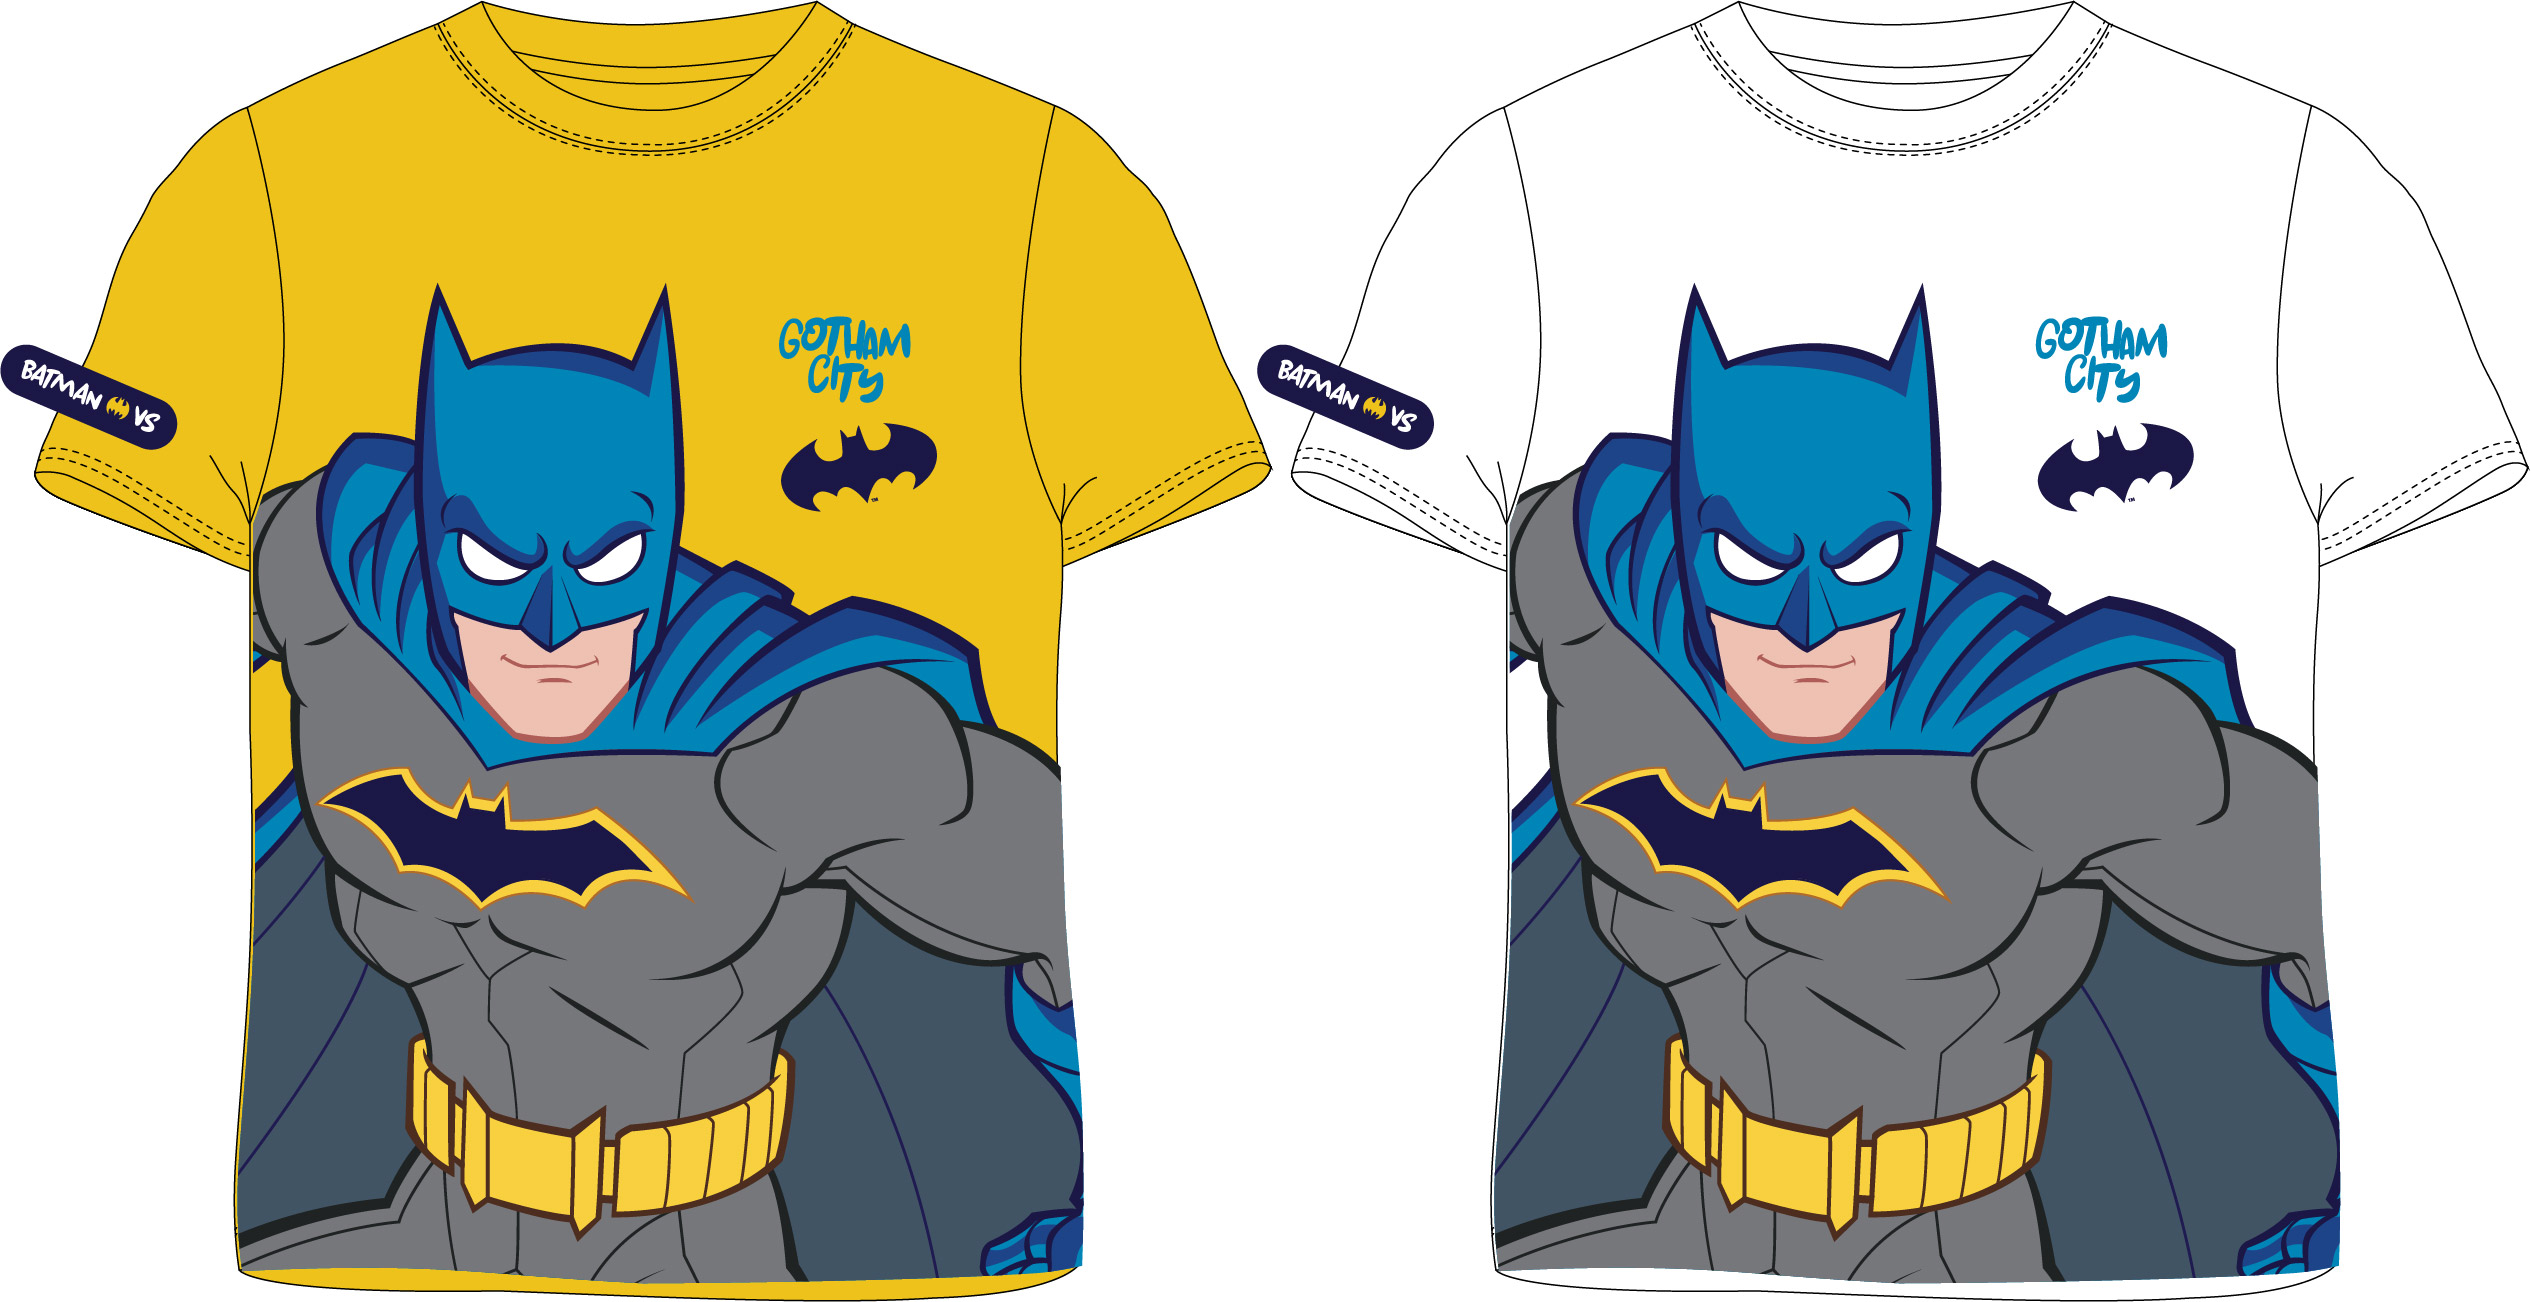 Batman - licence Chlapecké tričko - Batman 5202418, bílá Barva: Bílá, Velikost: 104